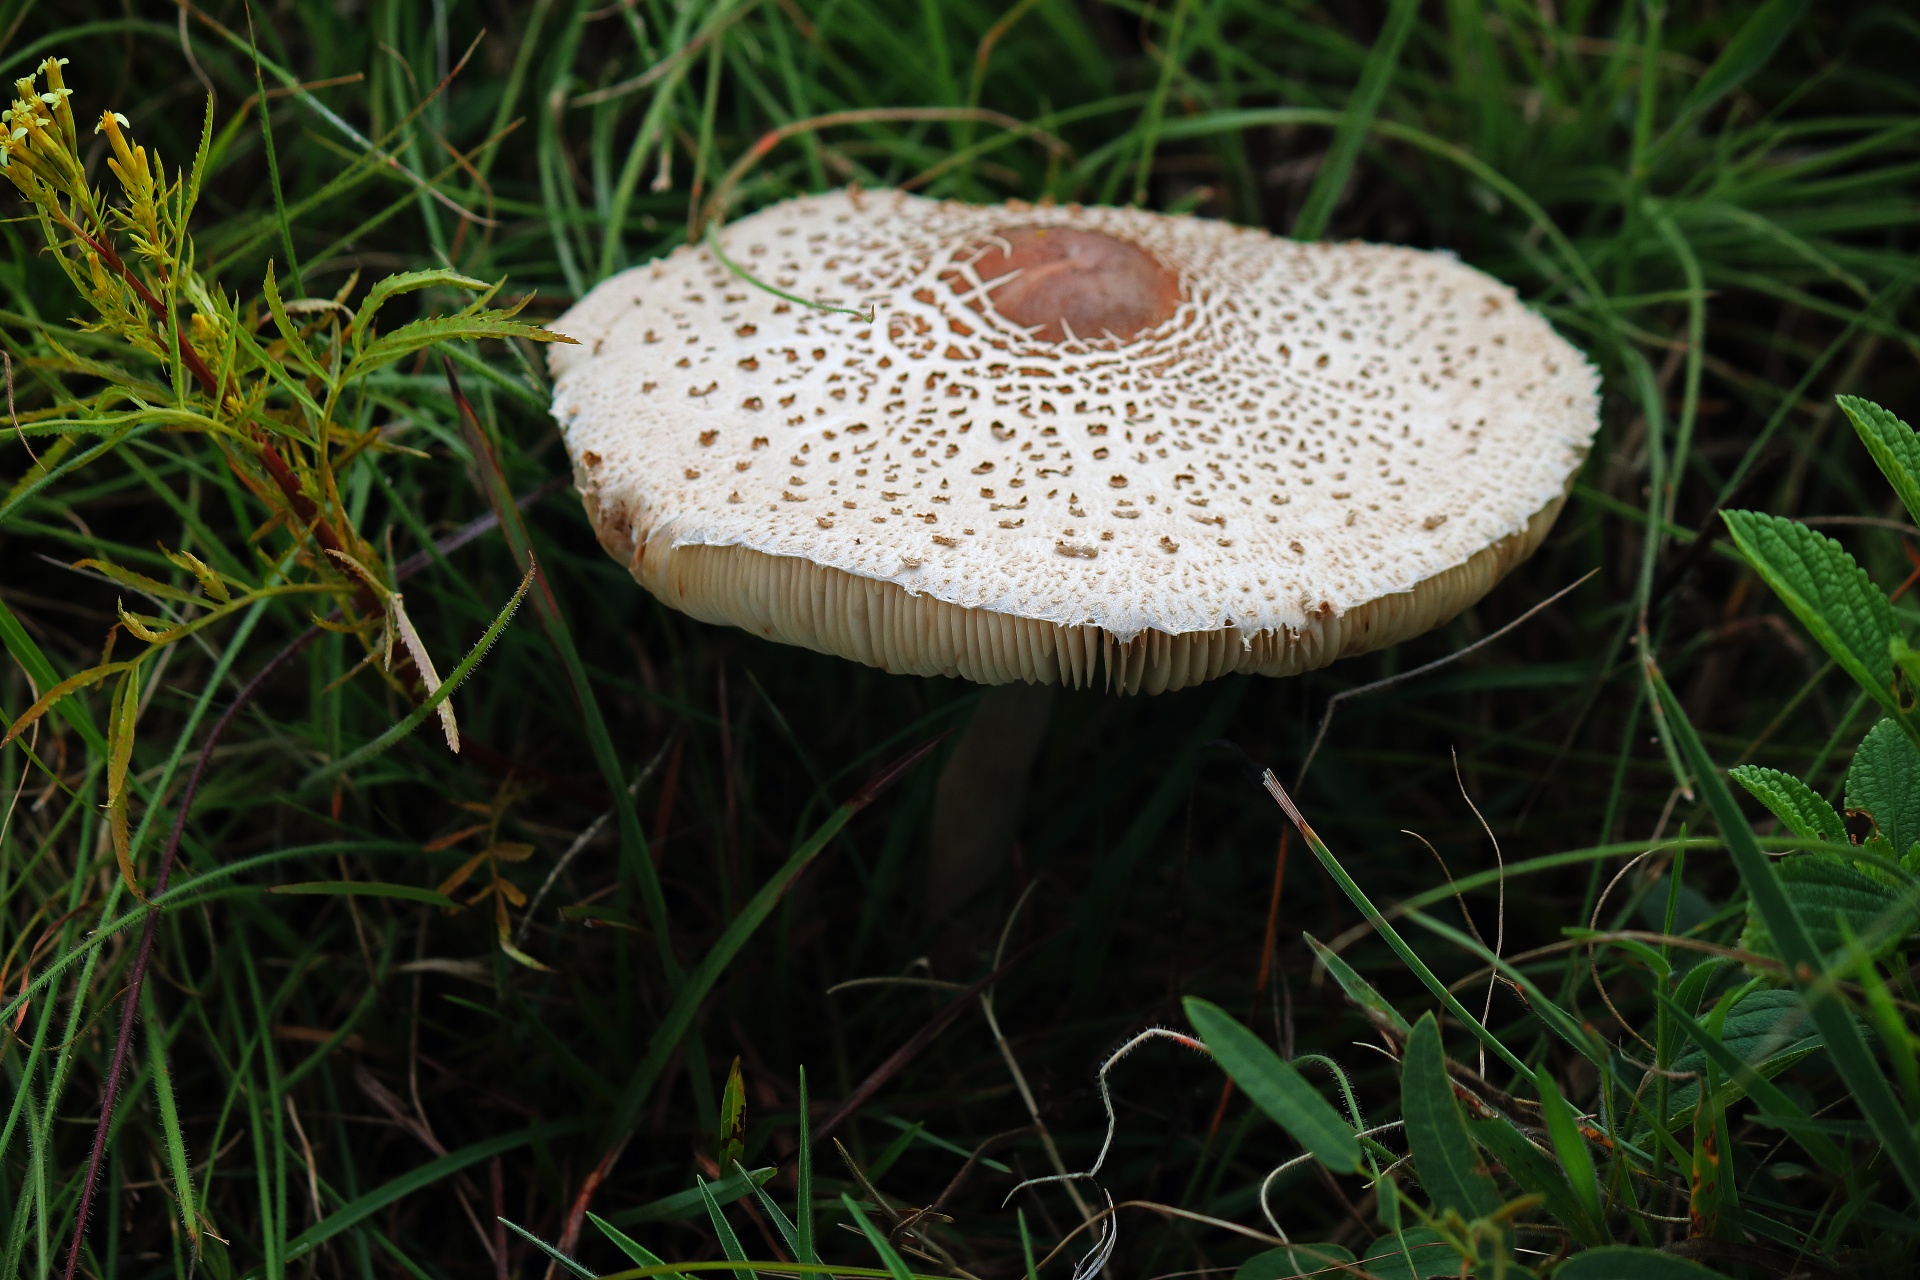 White Mushroom With Brown Markings